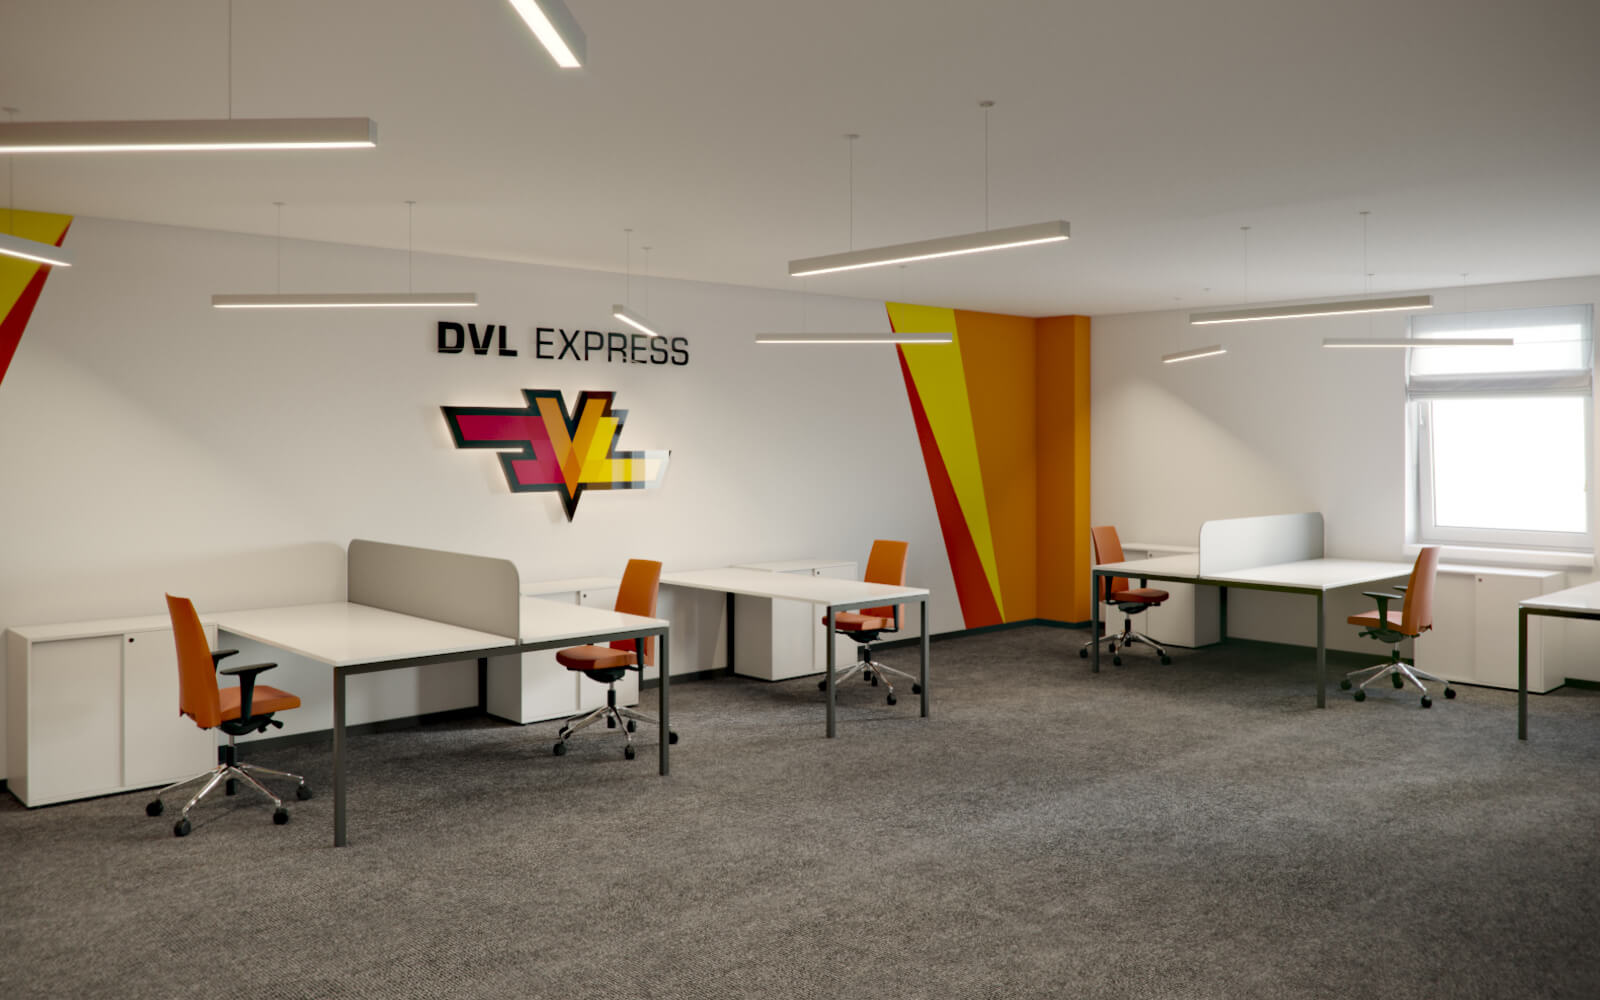 Офис DVL Express, Chicago, USA